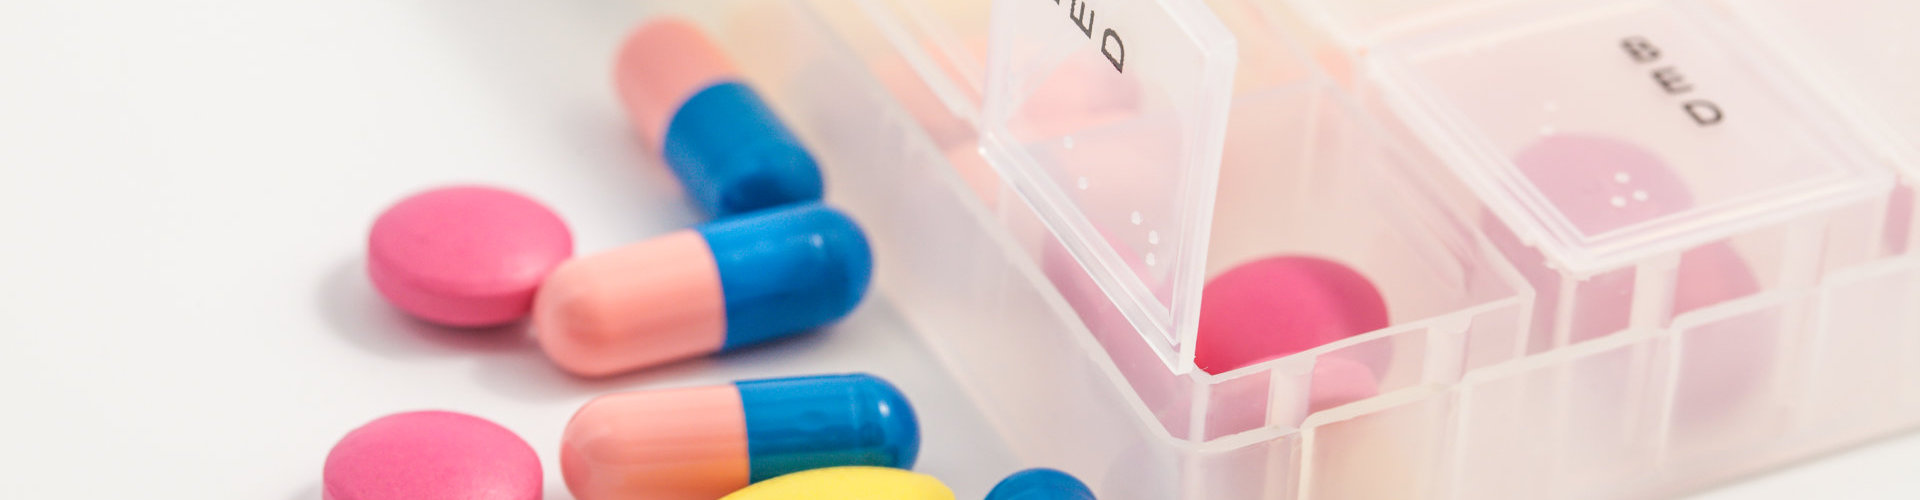 drugs and medicine inside a pill organizer